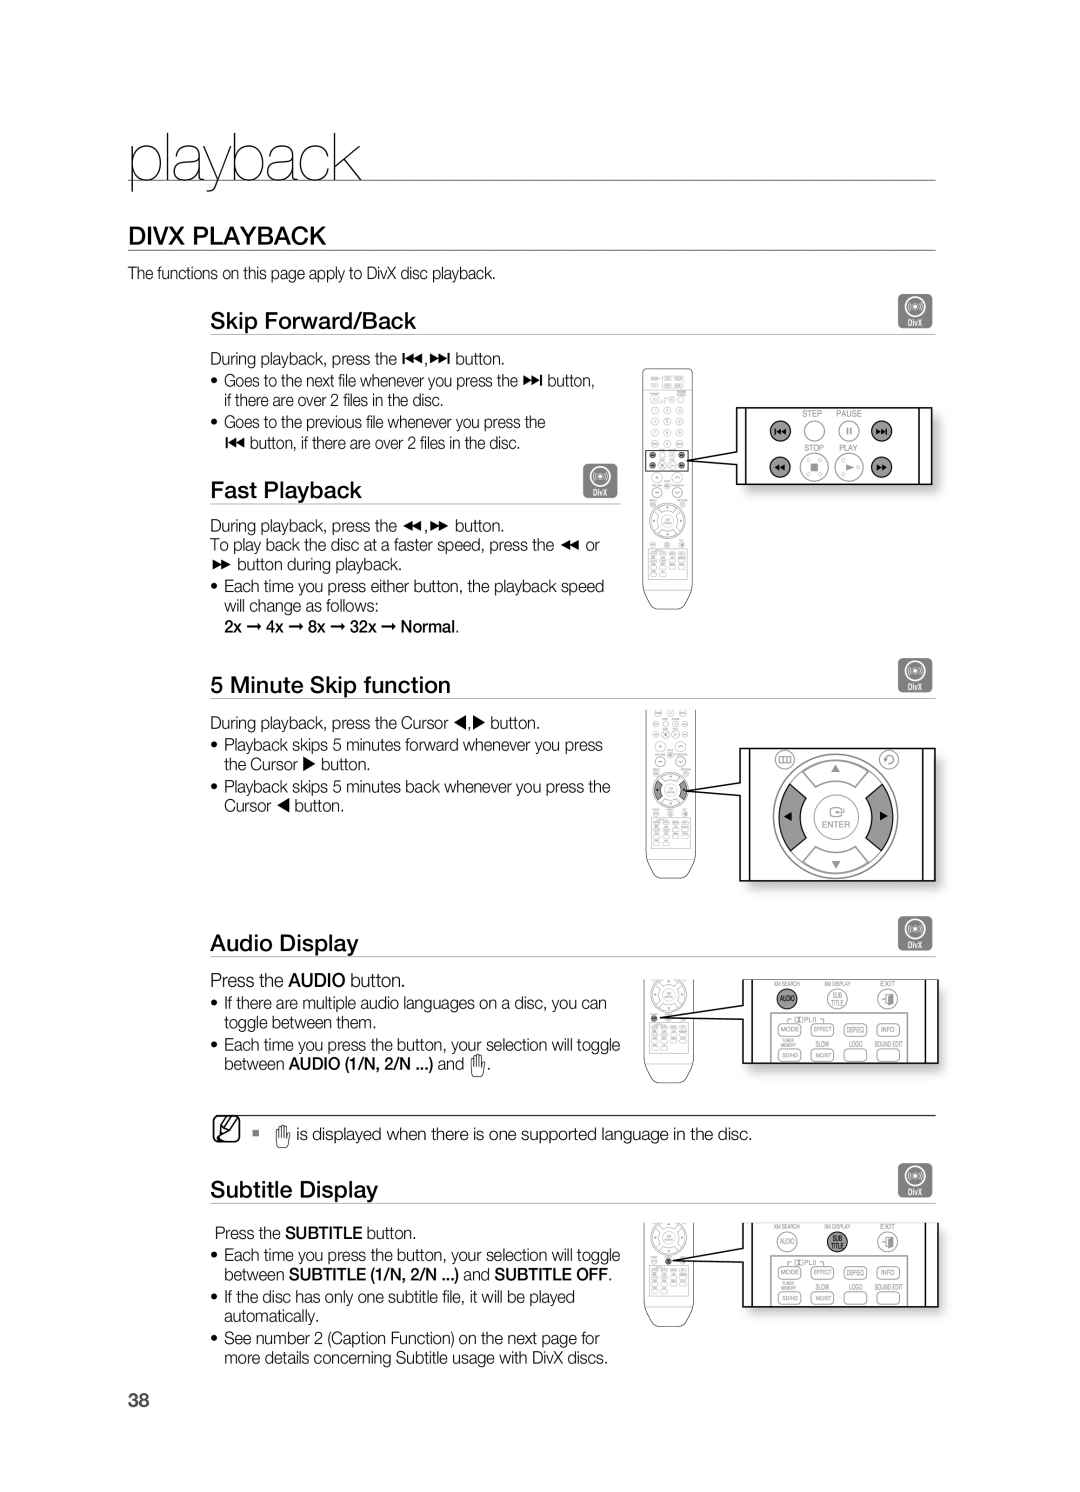 Samsung HT-TZ515 user manual Divx Playback, playback 